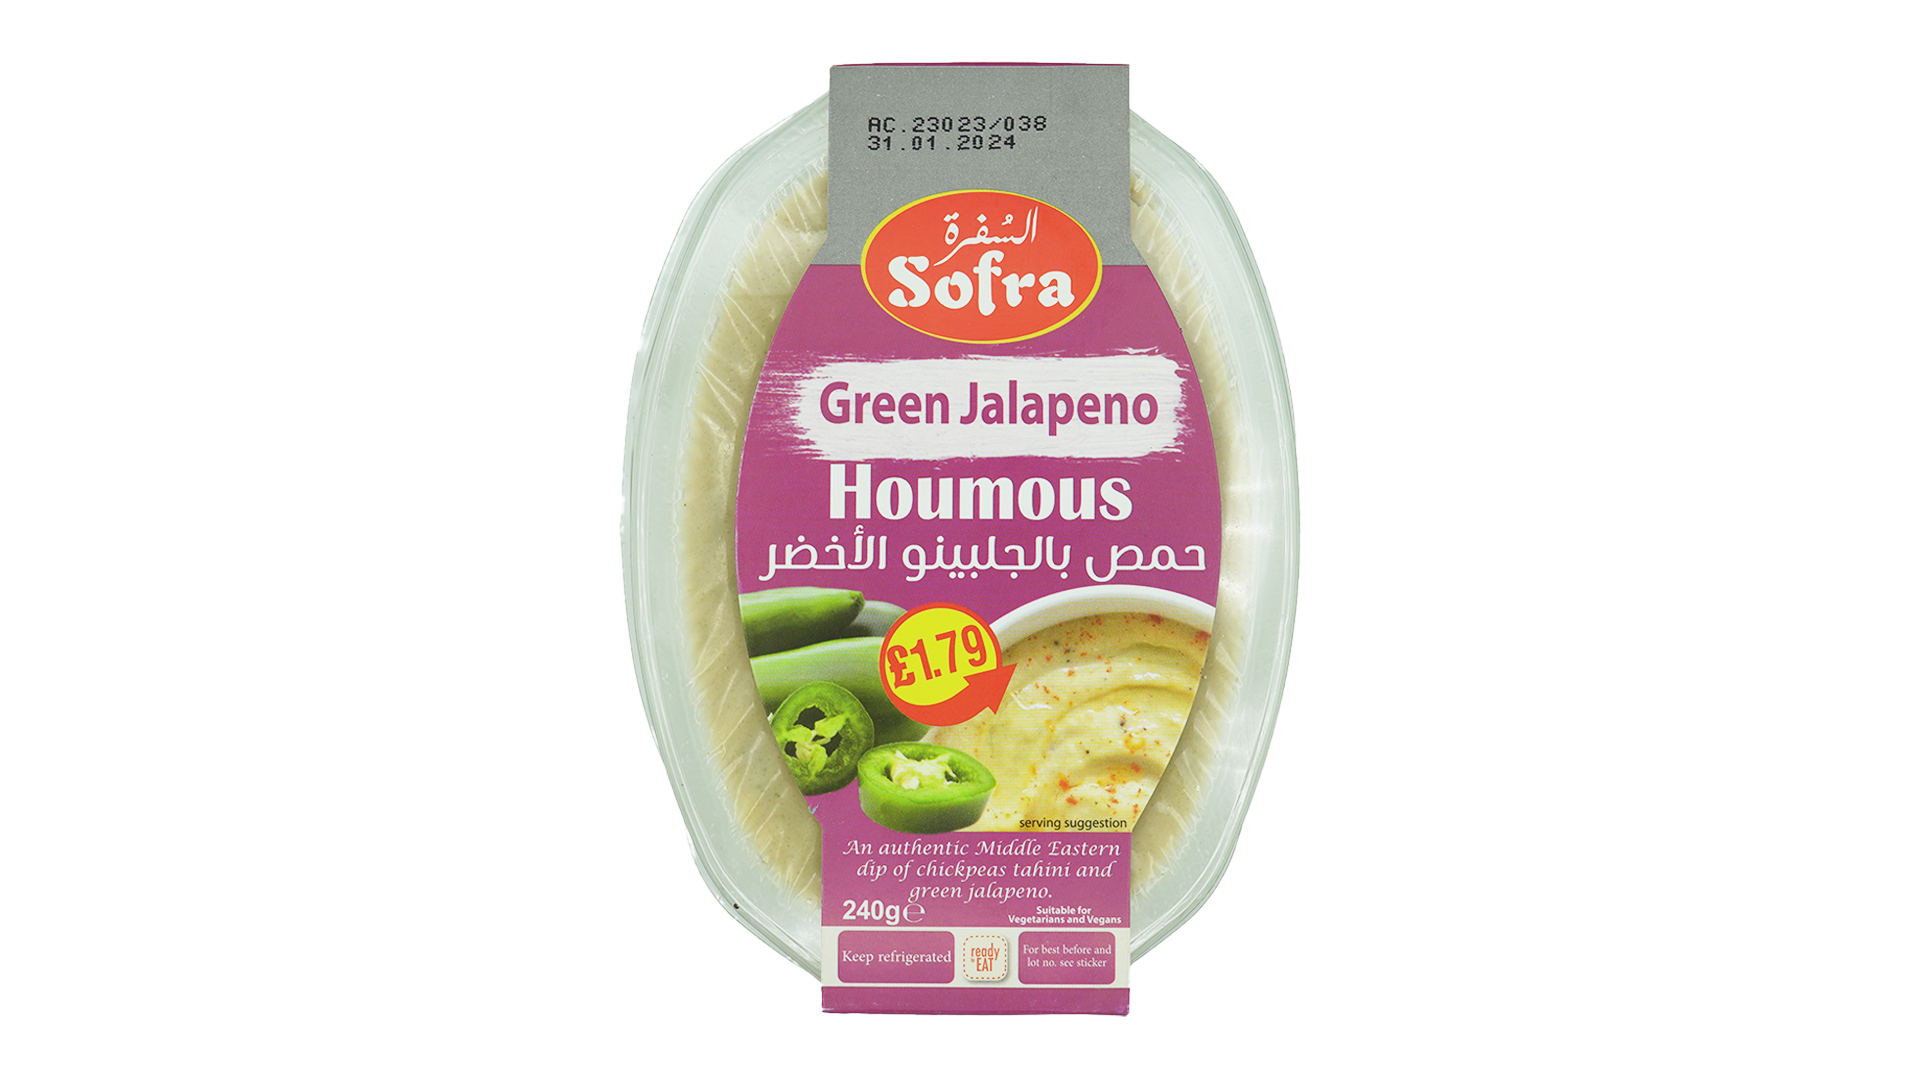 Sofra green jalapeno houmous 240g 1